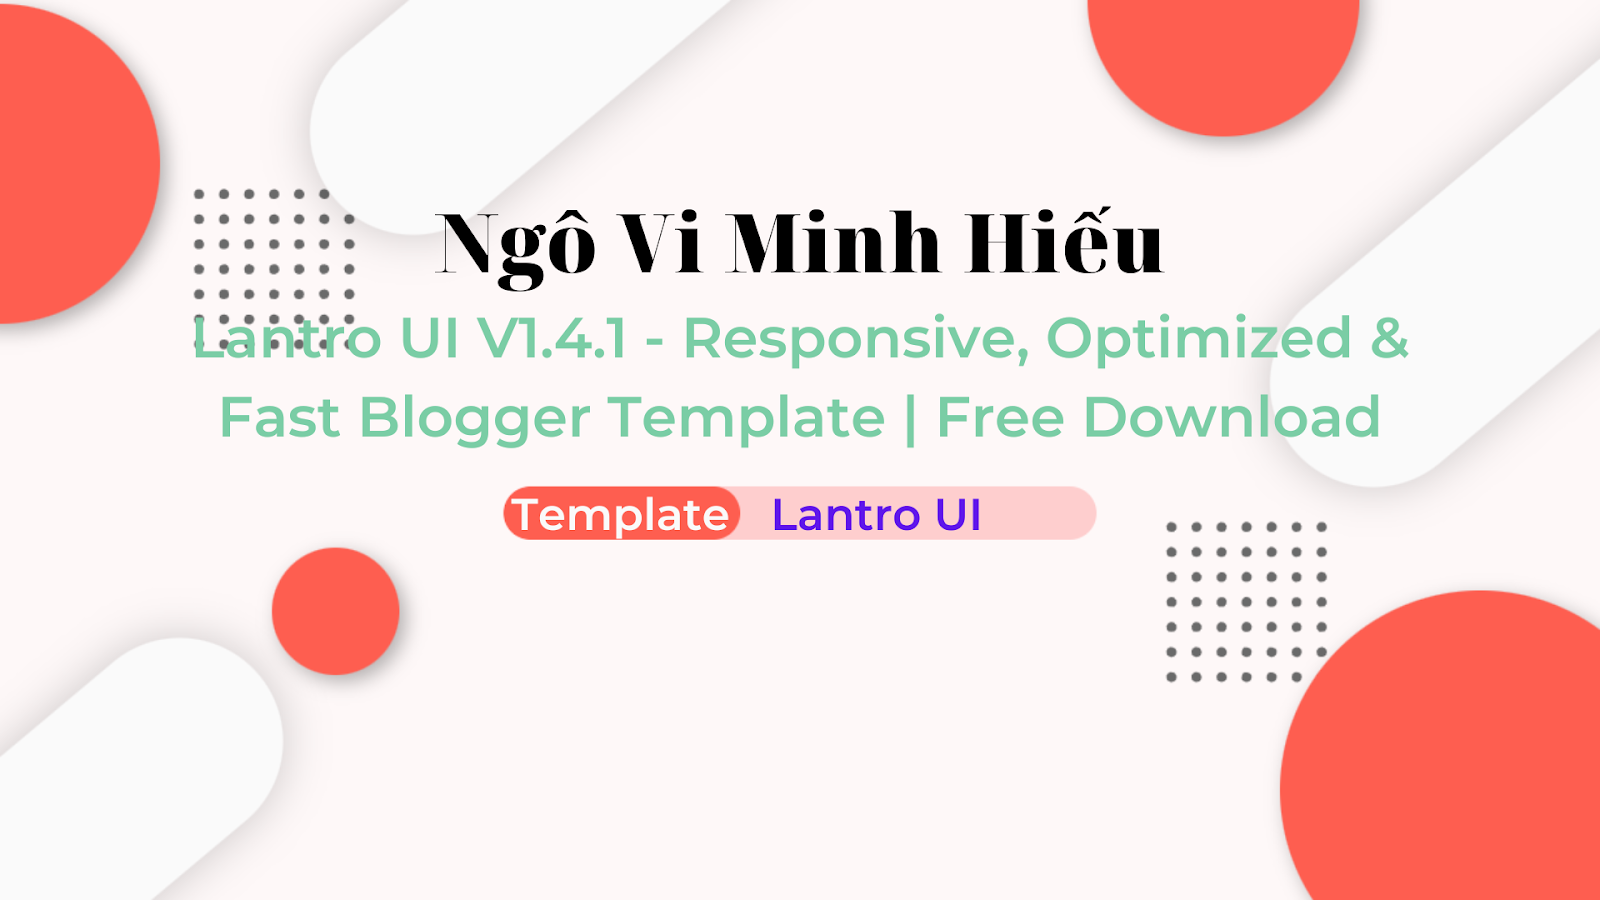 Lantro UI V1.4.1 - Responsive, Optimized & Fast Blogger Template | Free Download